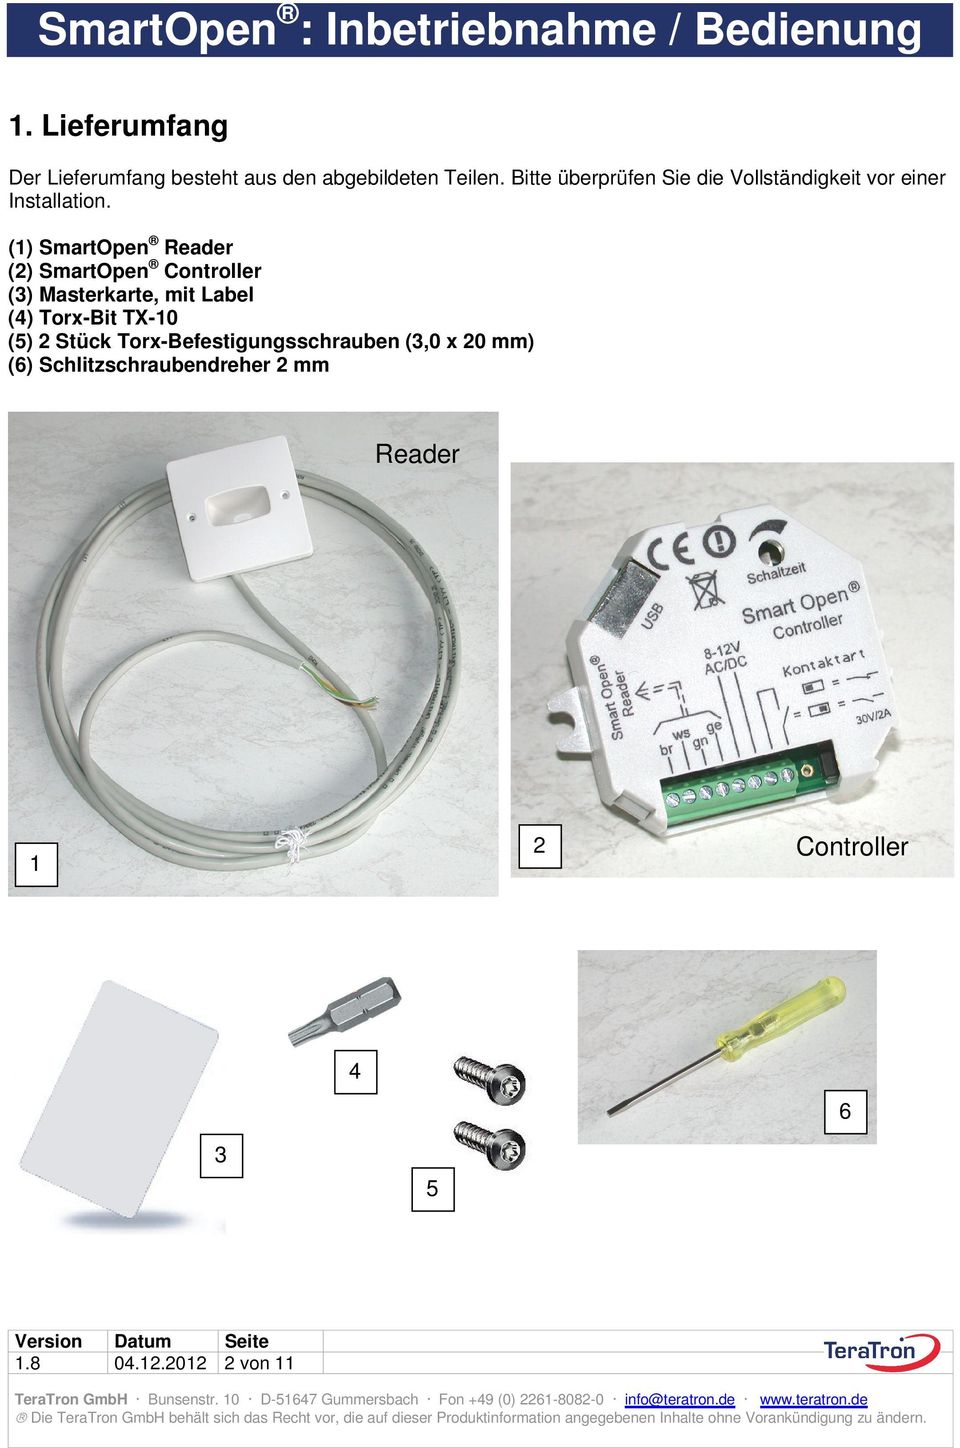 (1) SmartOpen Reader (2) SmartOpen Controller (3) Masterkarte, mit Label (4) Torx-Bit TX-10